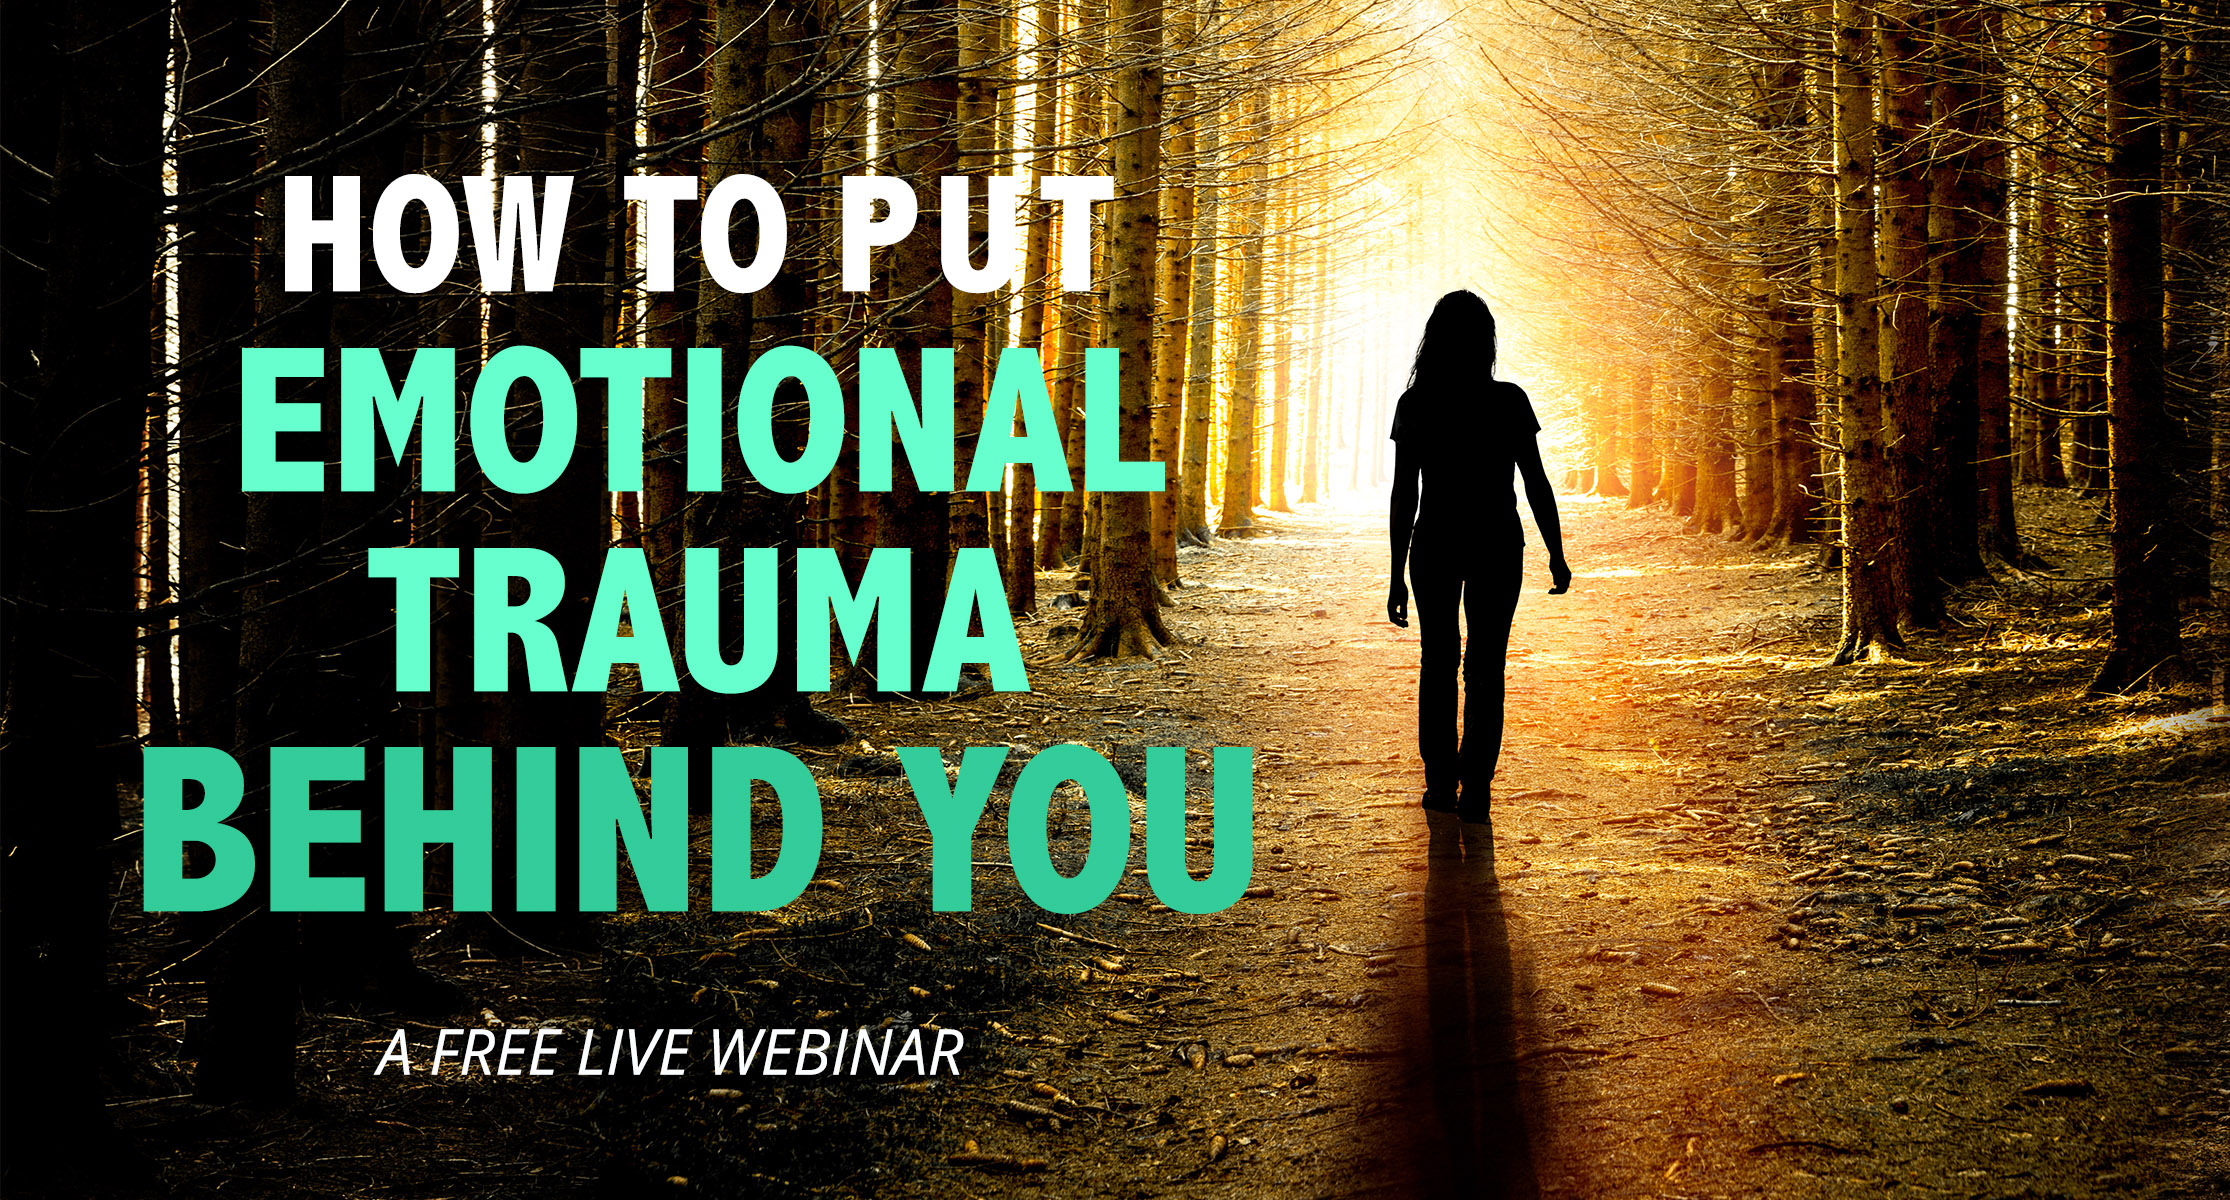 How to Put Emotional Trauma Behind You